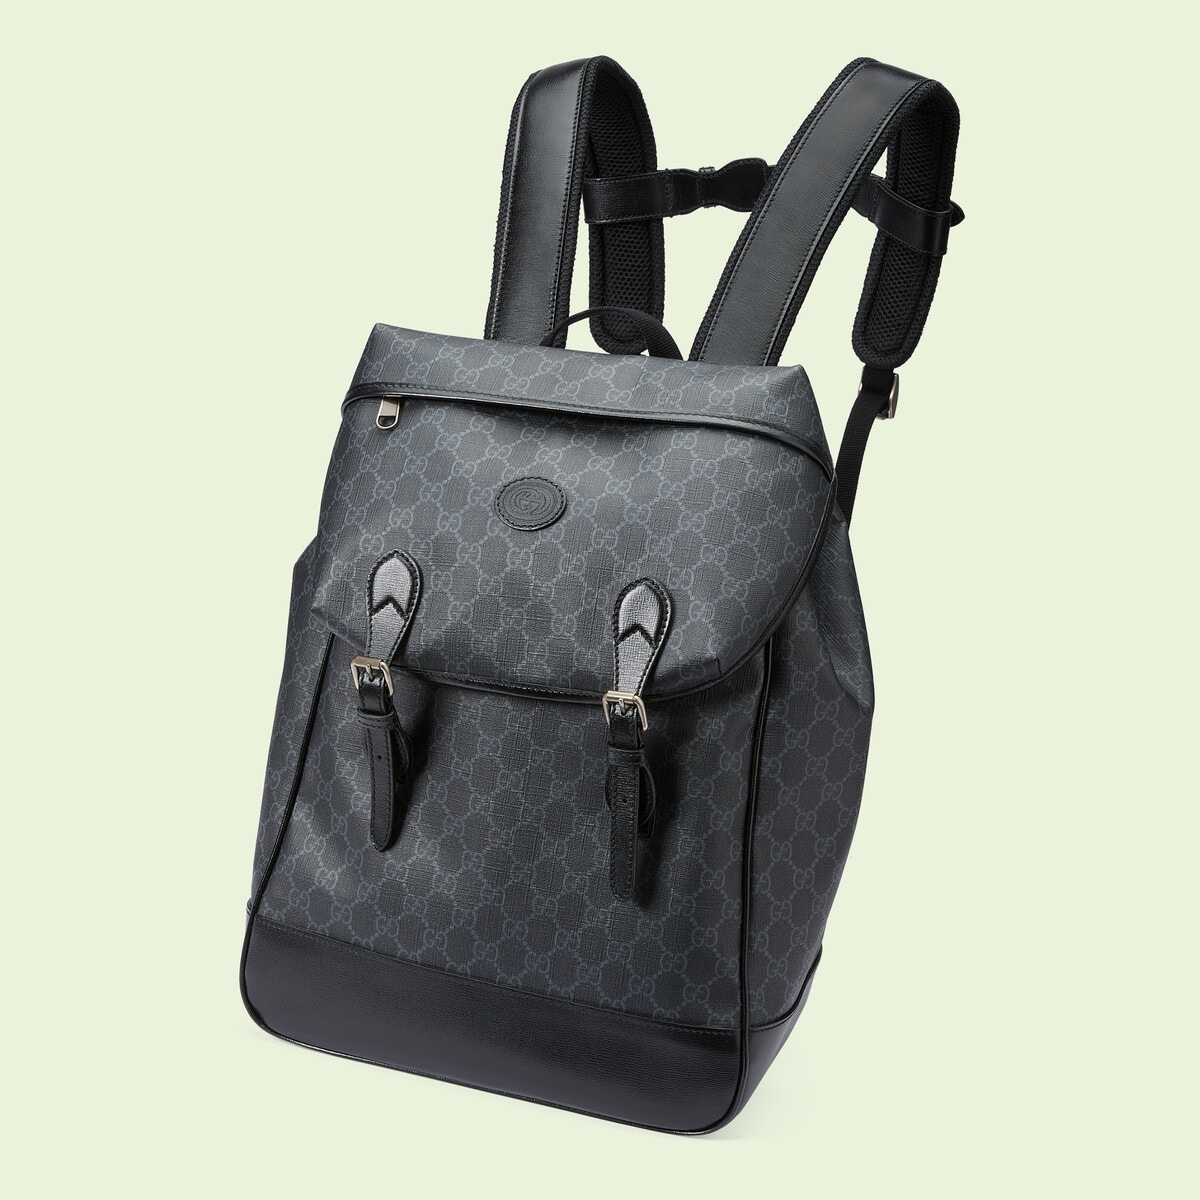 Medium backpack with Interlocking G - 3